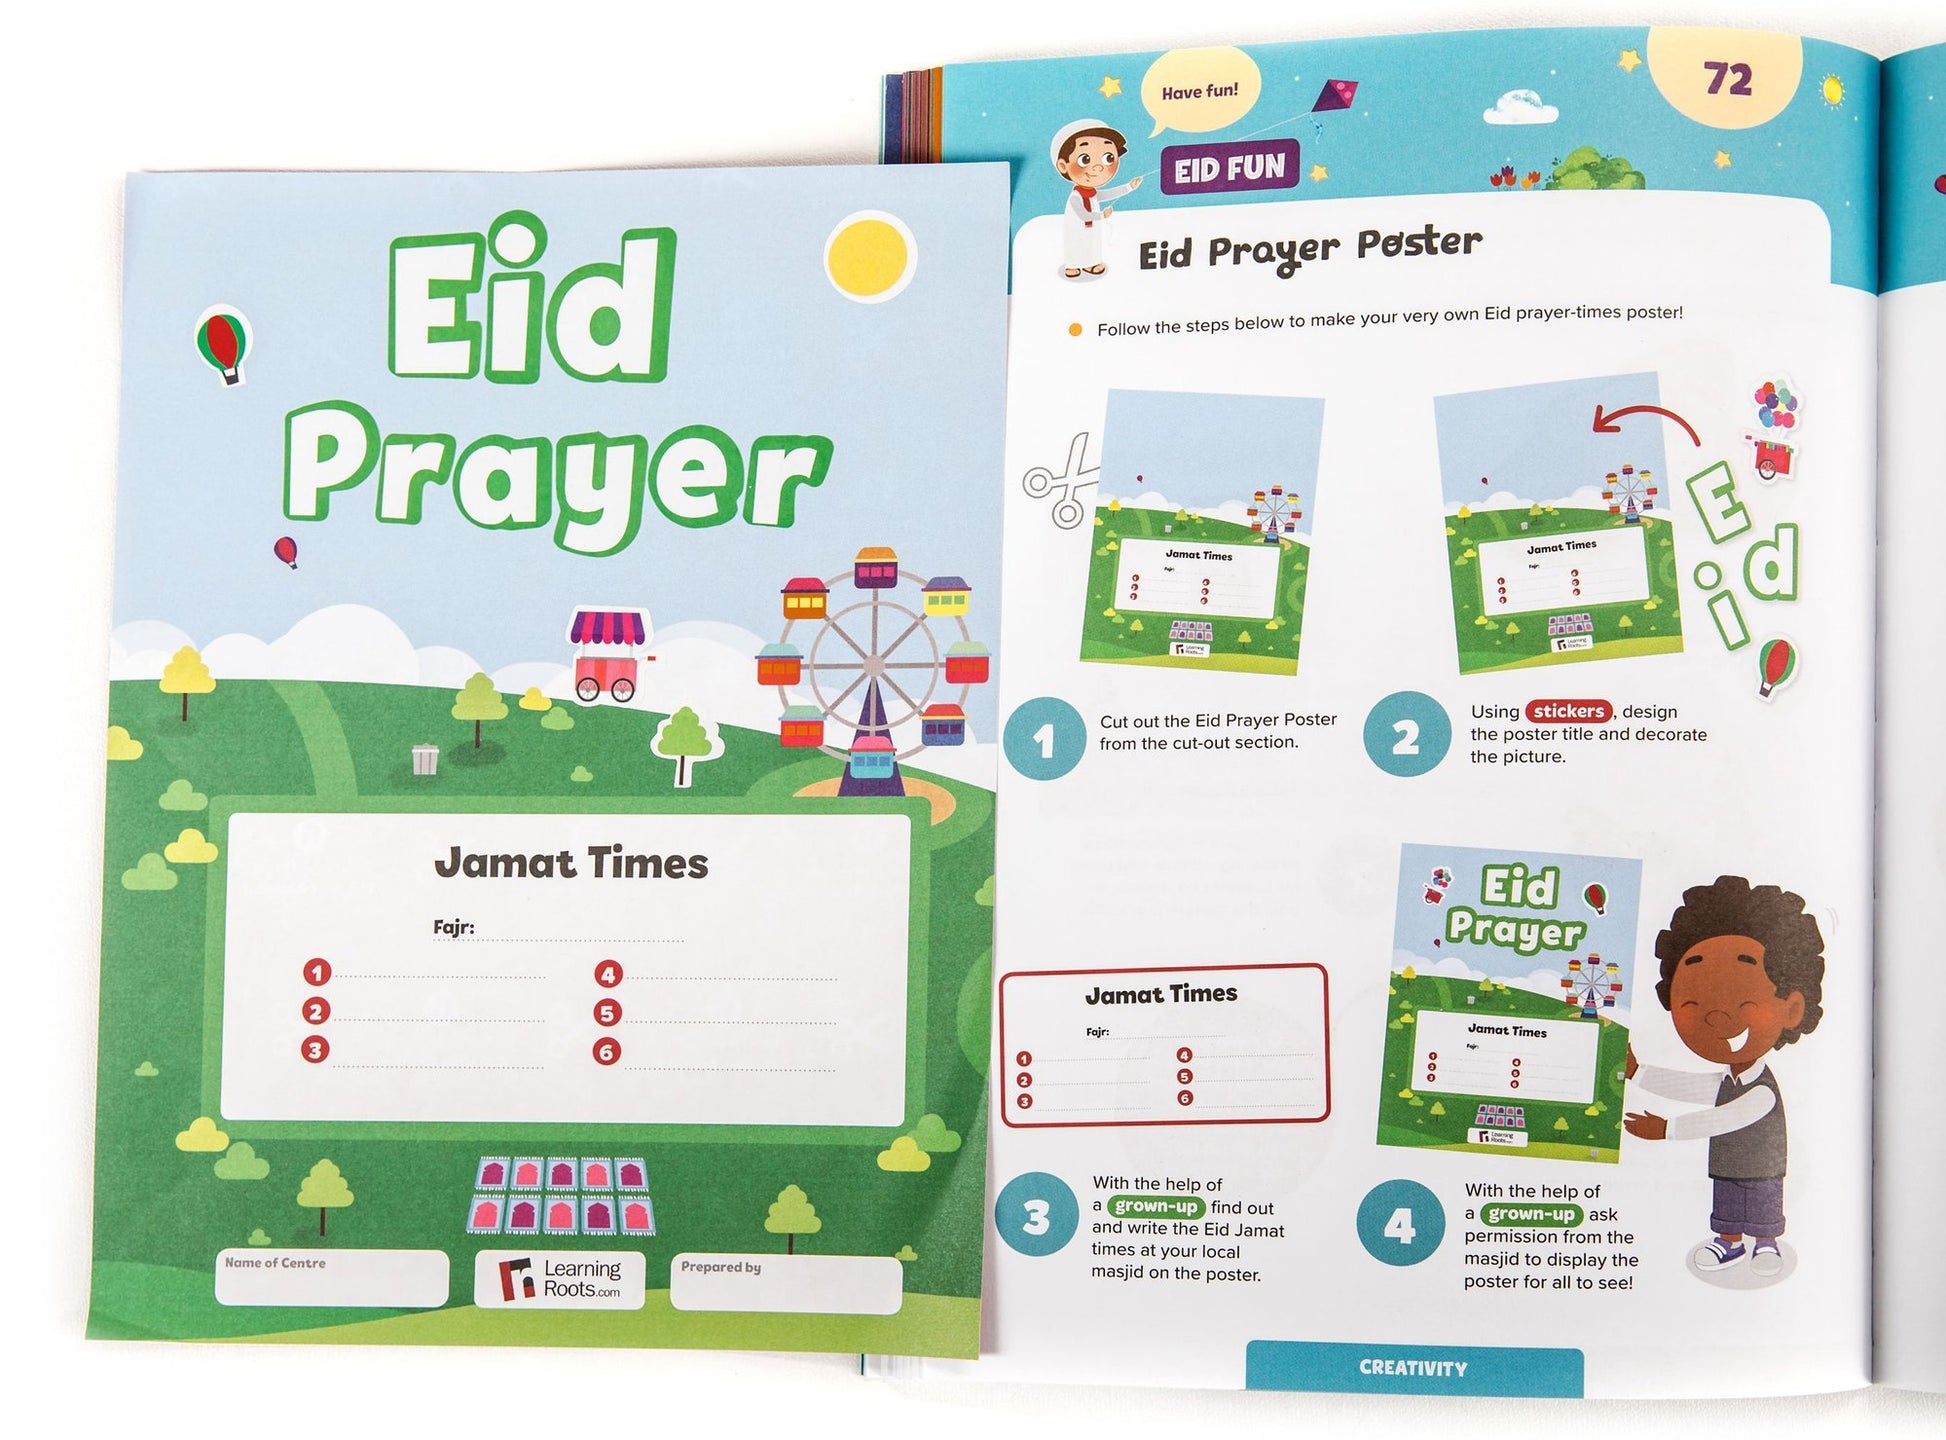 Ramadan Activity Book (Big Kids & Little Kids)-almanaar Islamic Store